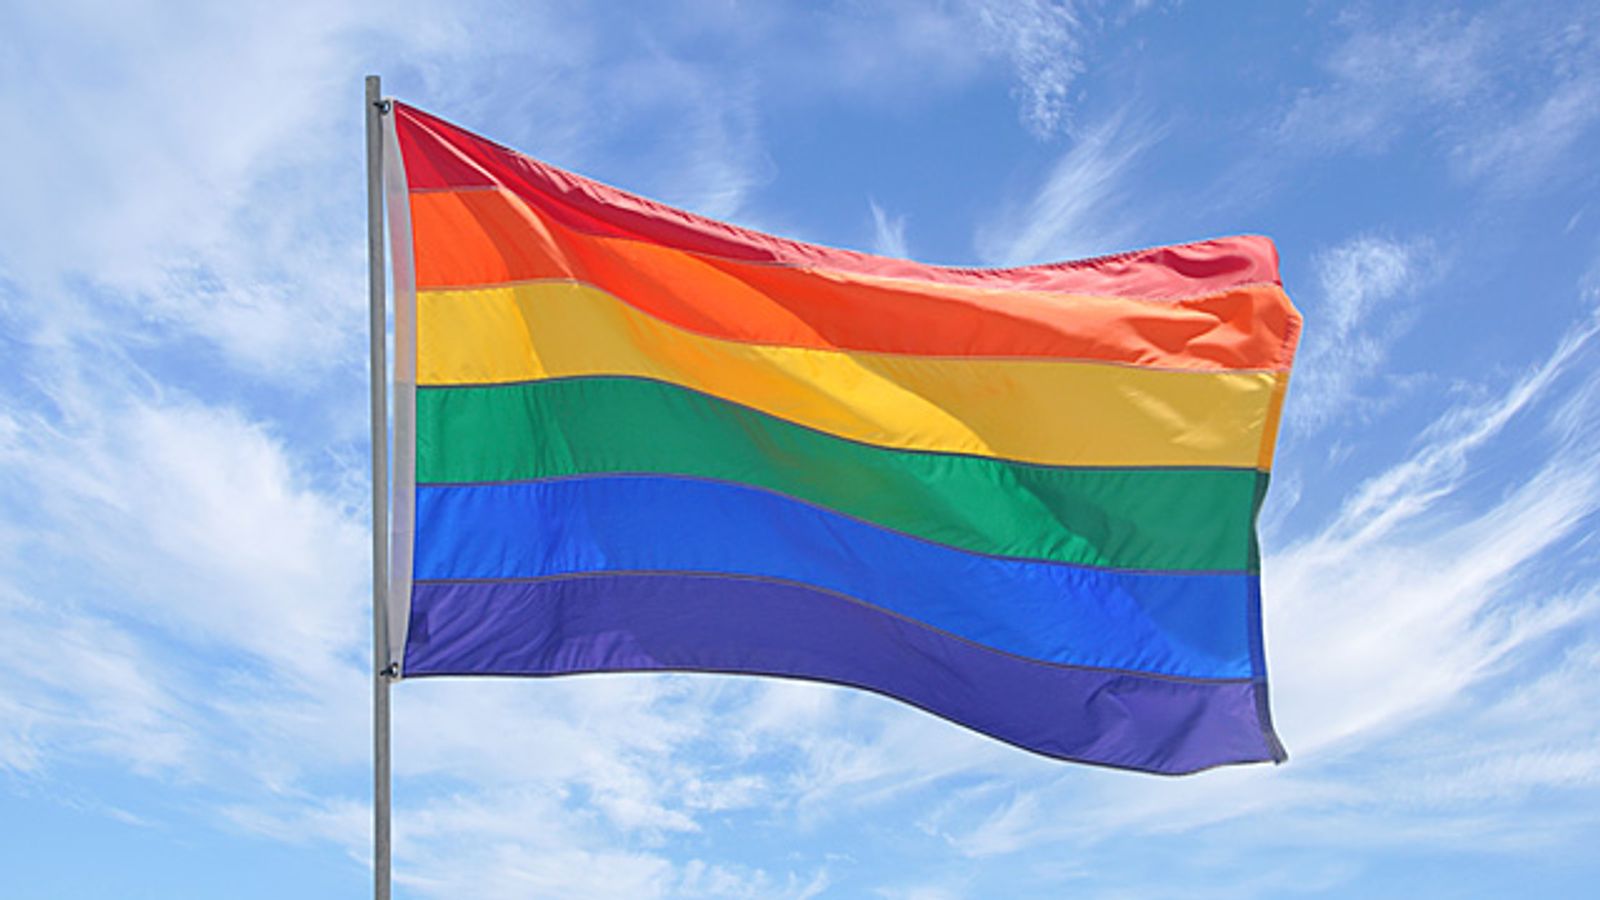 Nalpac Ltd. Celebrates LGBT Pride Month